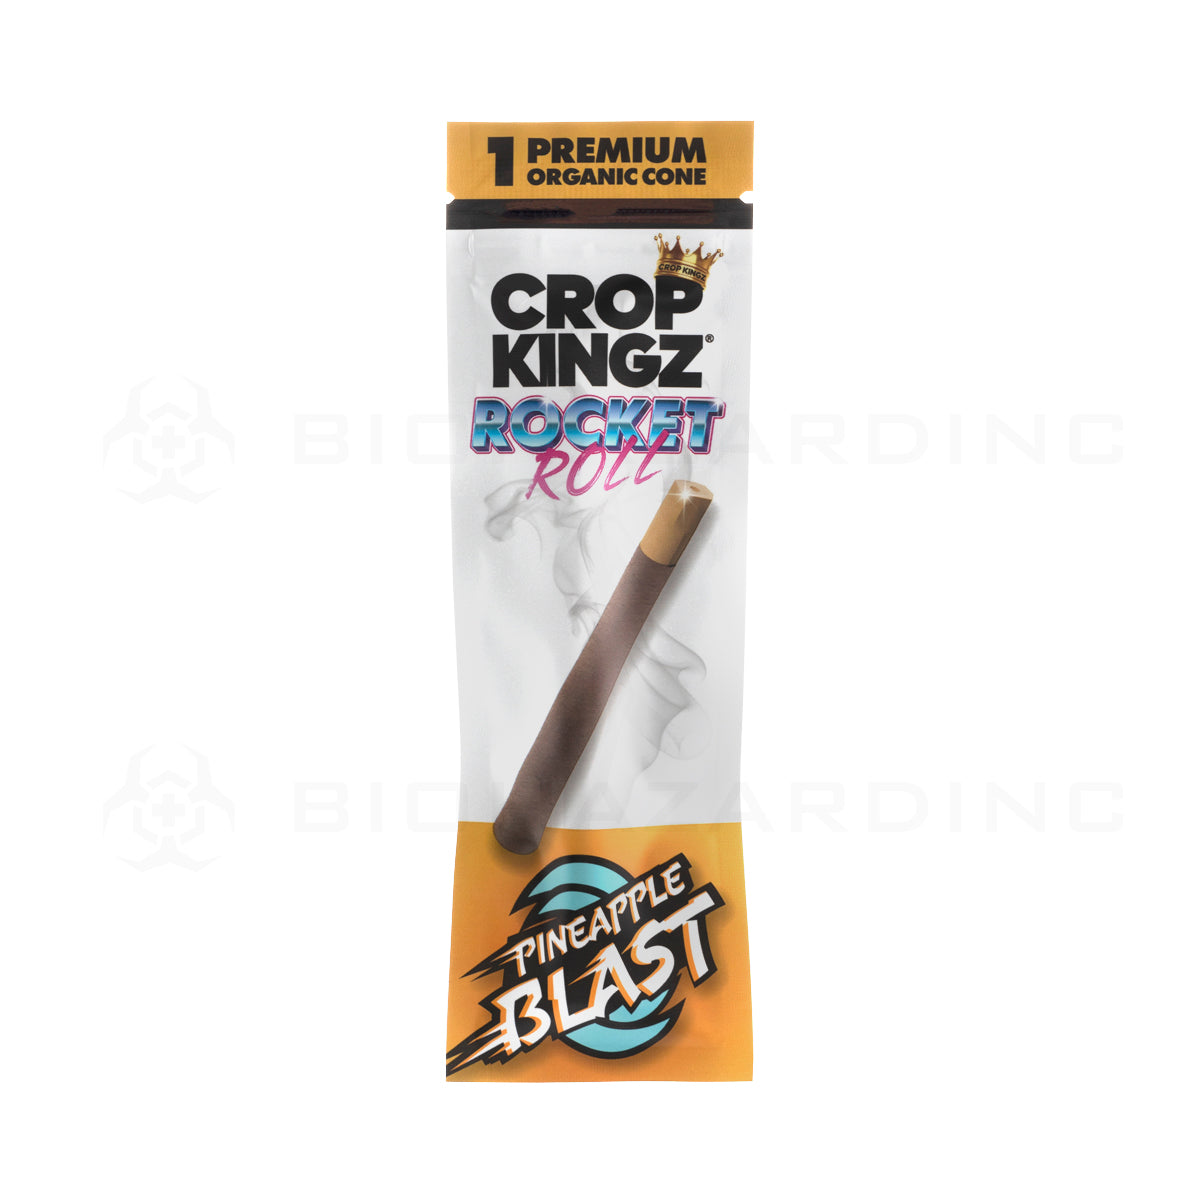 Crop Kingz | Rocket Roll Organic Hemp Wrap | Pineapple Blast - 15 Count